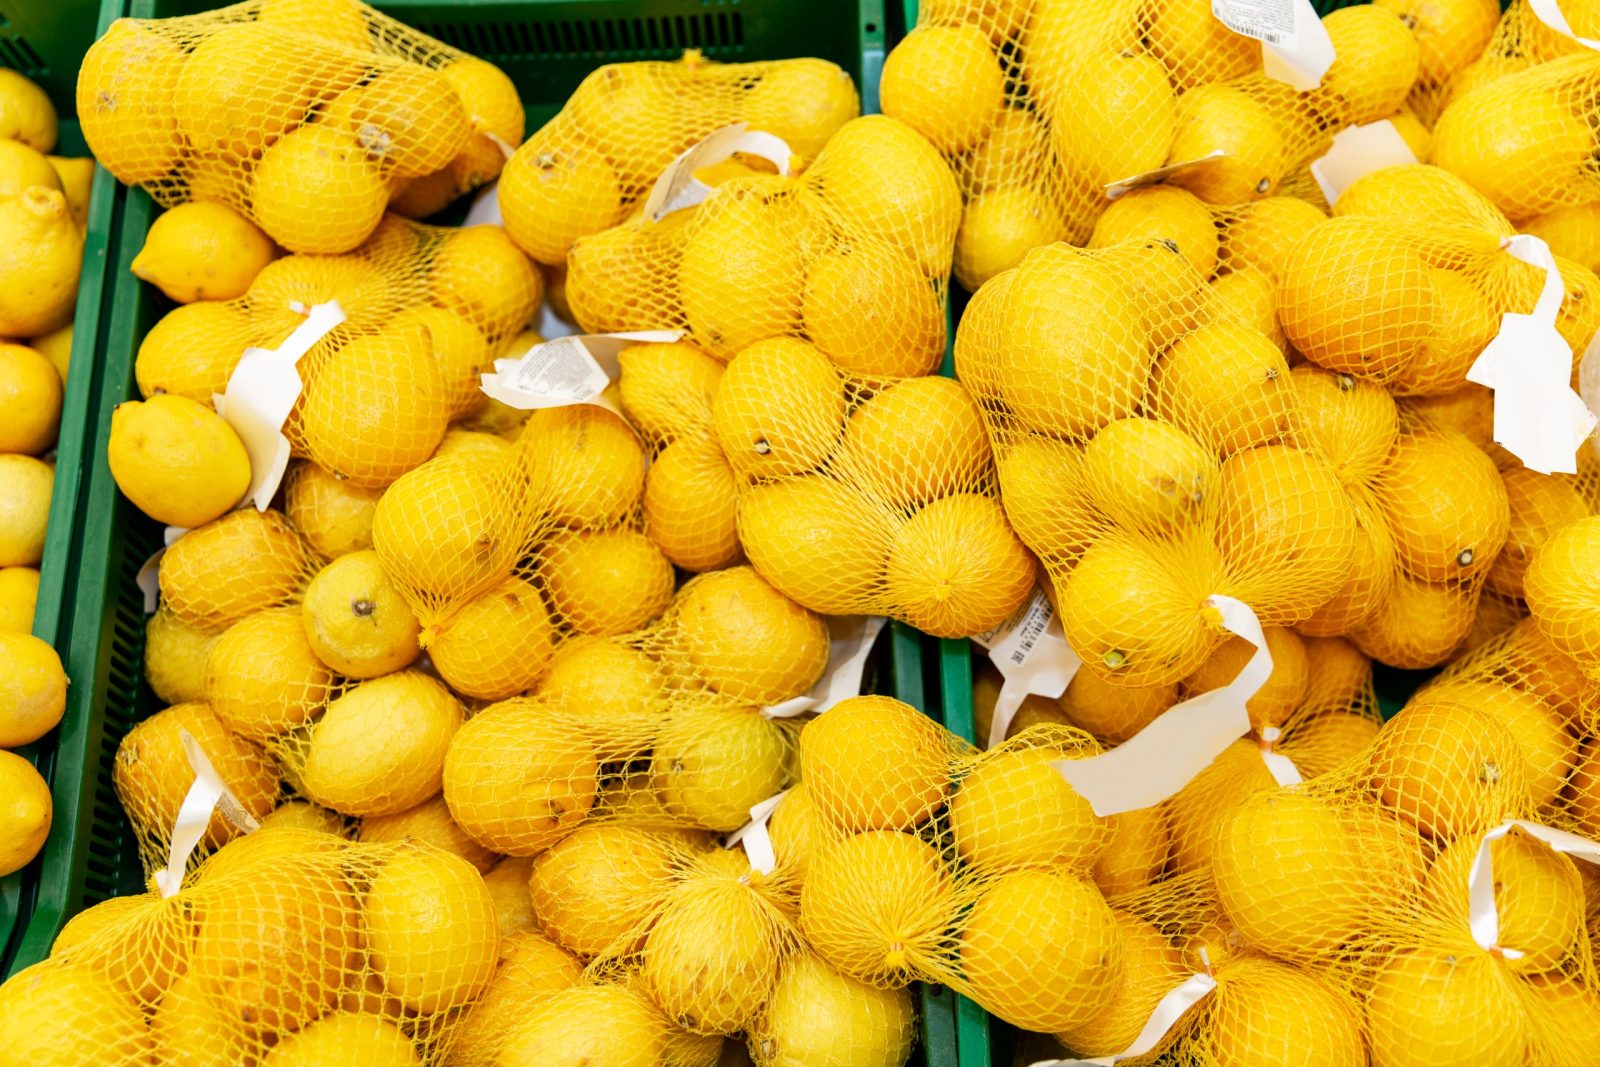 Lemons in mesh bags